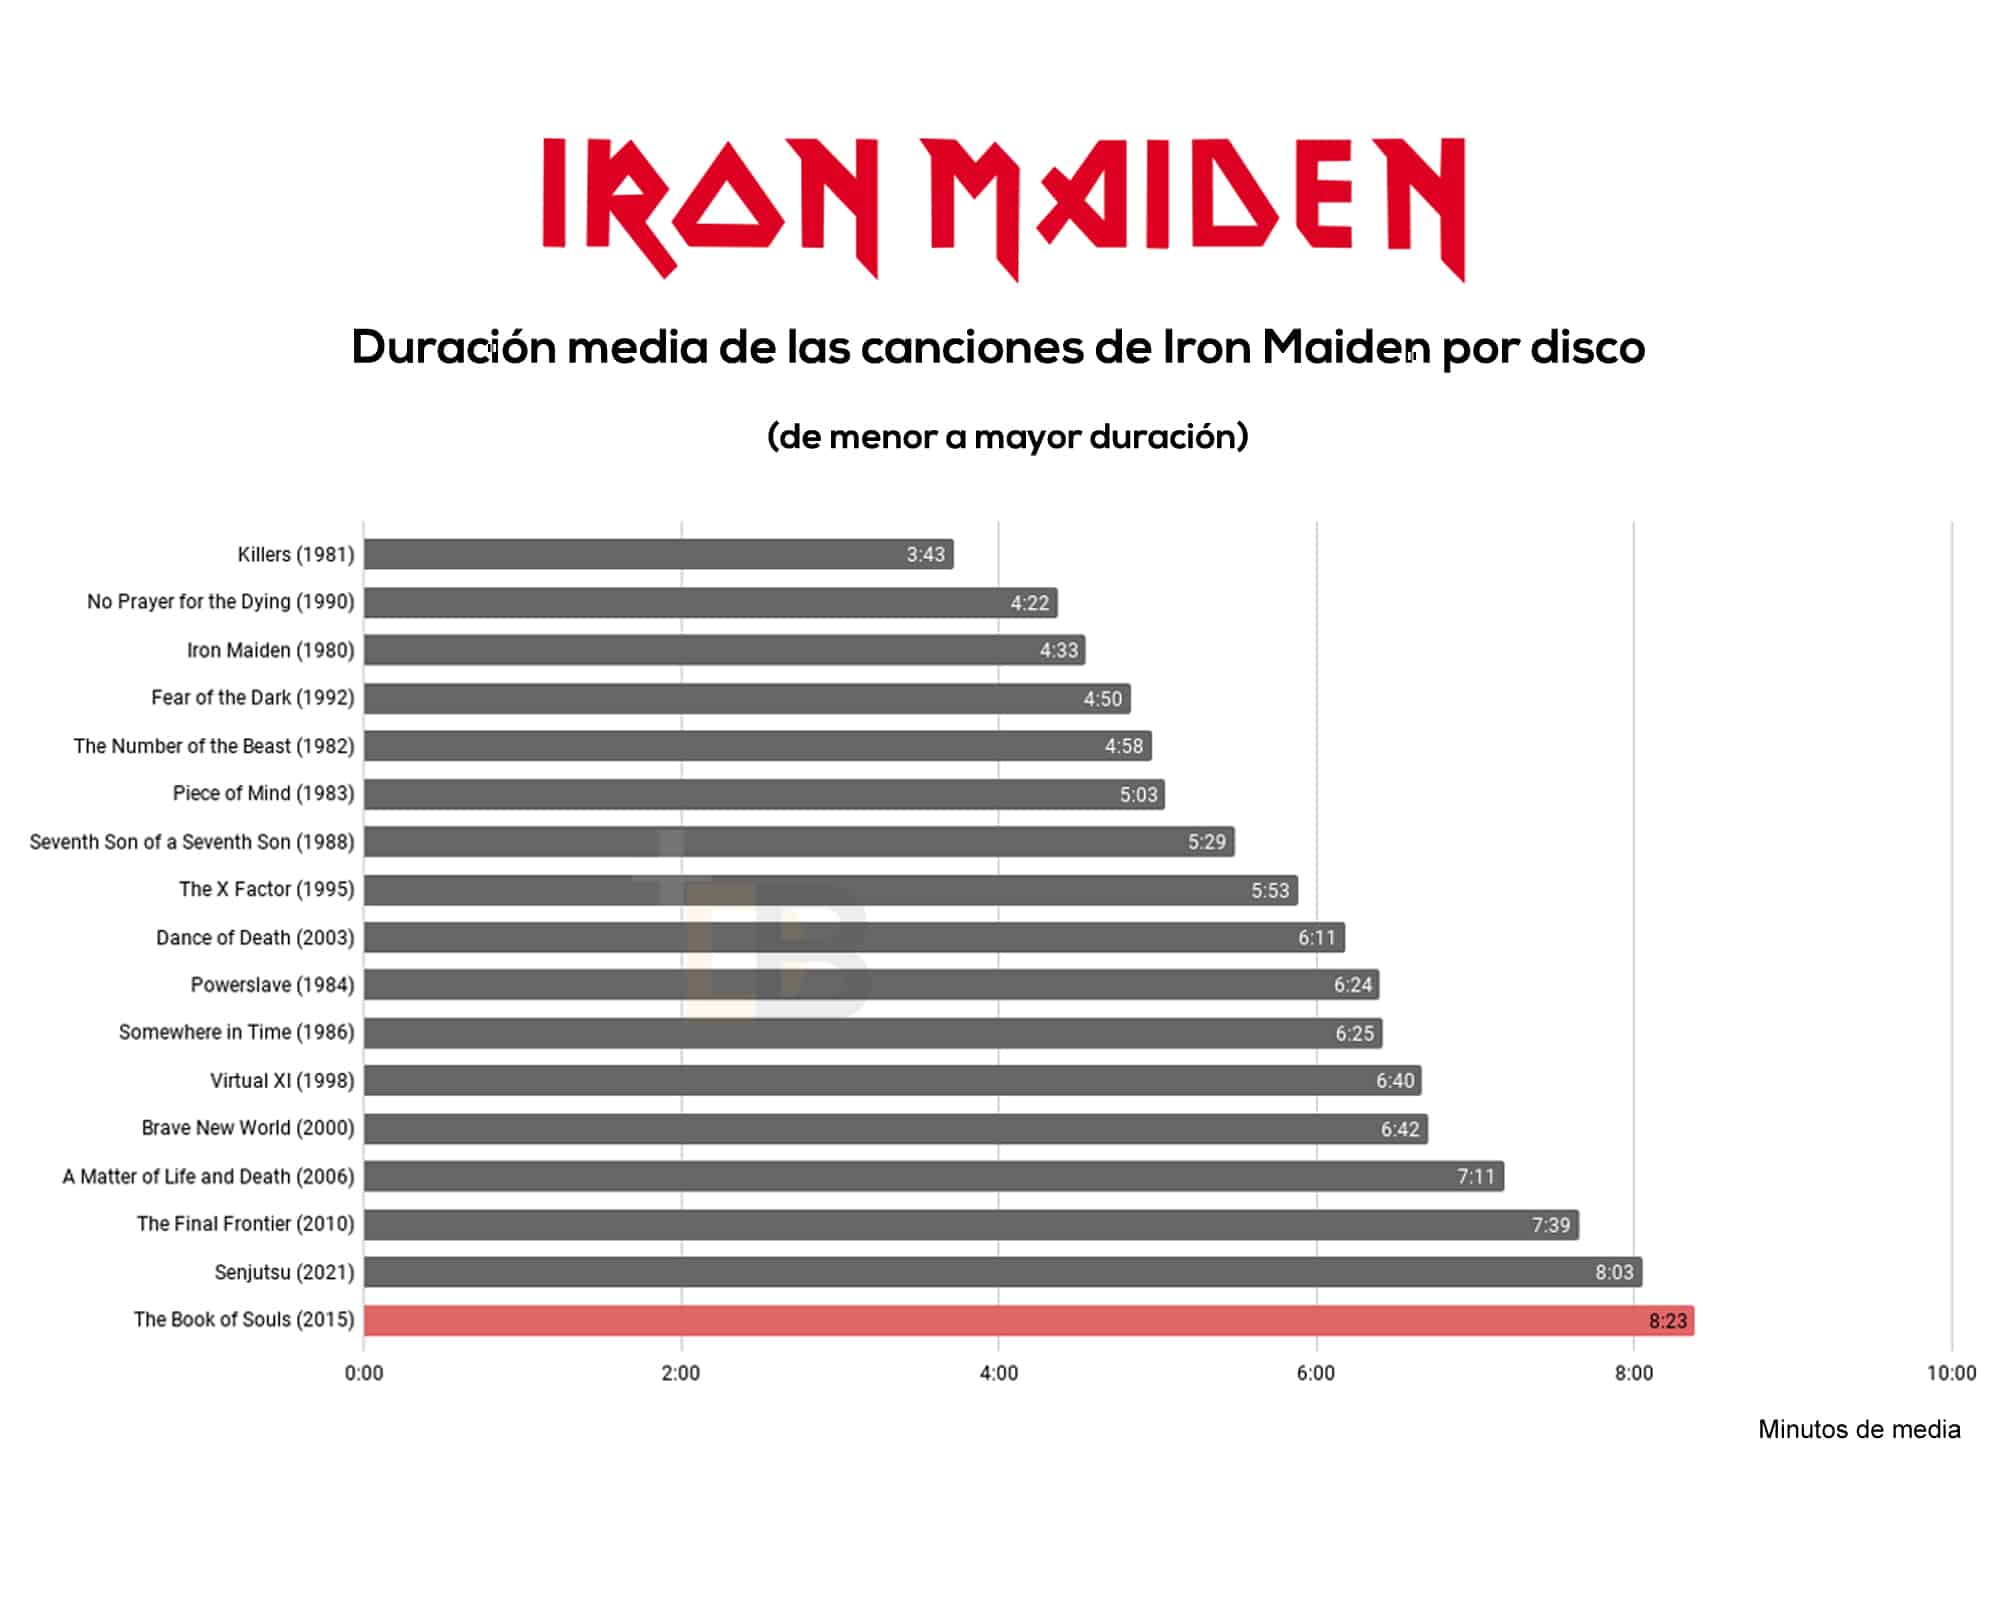 iron maiden duracion media grande